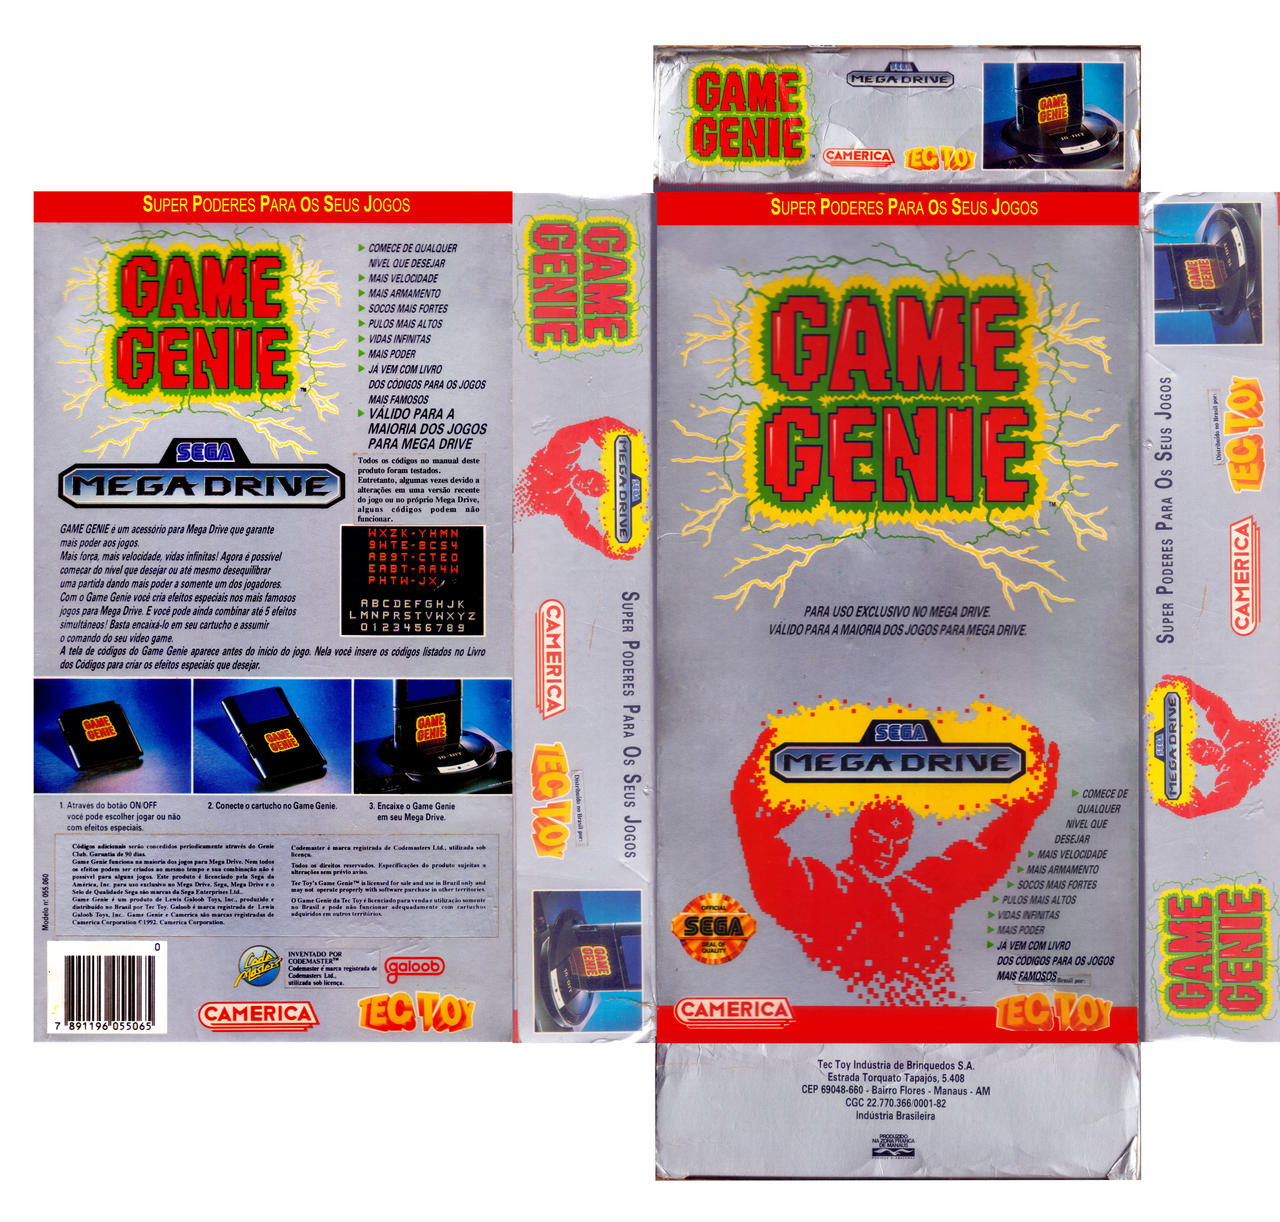 SEGA GG - TEC TOY Genesis Game Genie Box Cover by gamejelly on